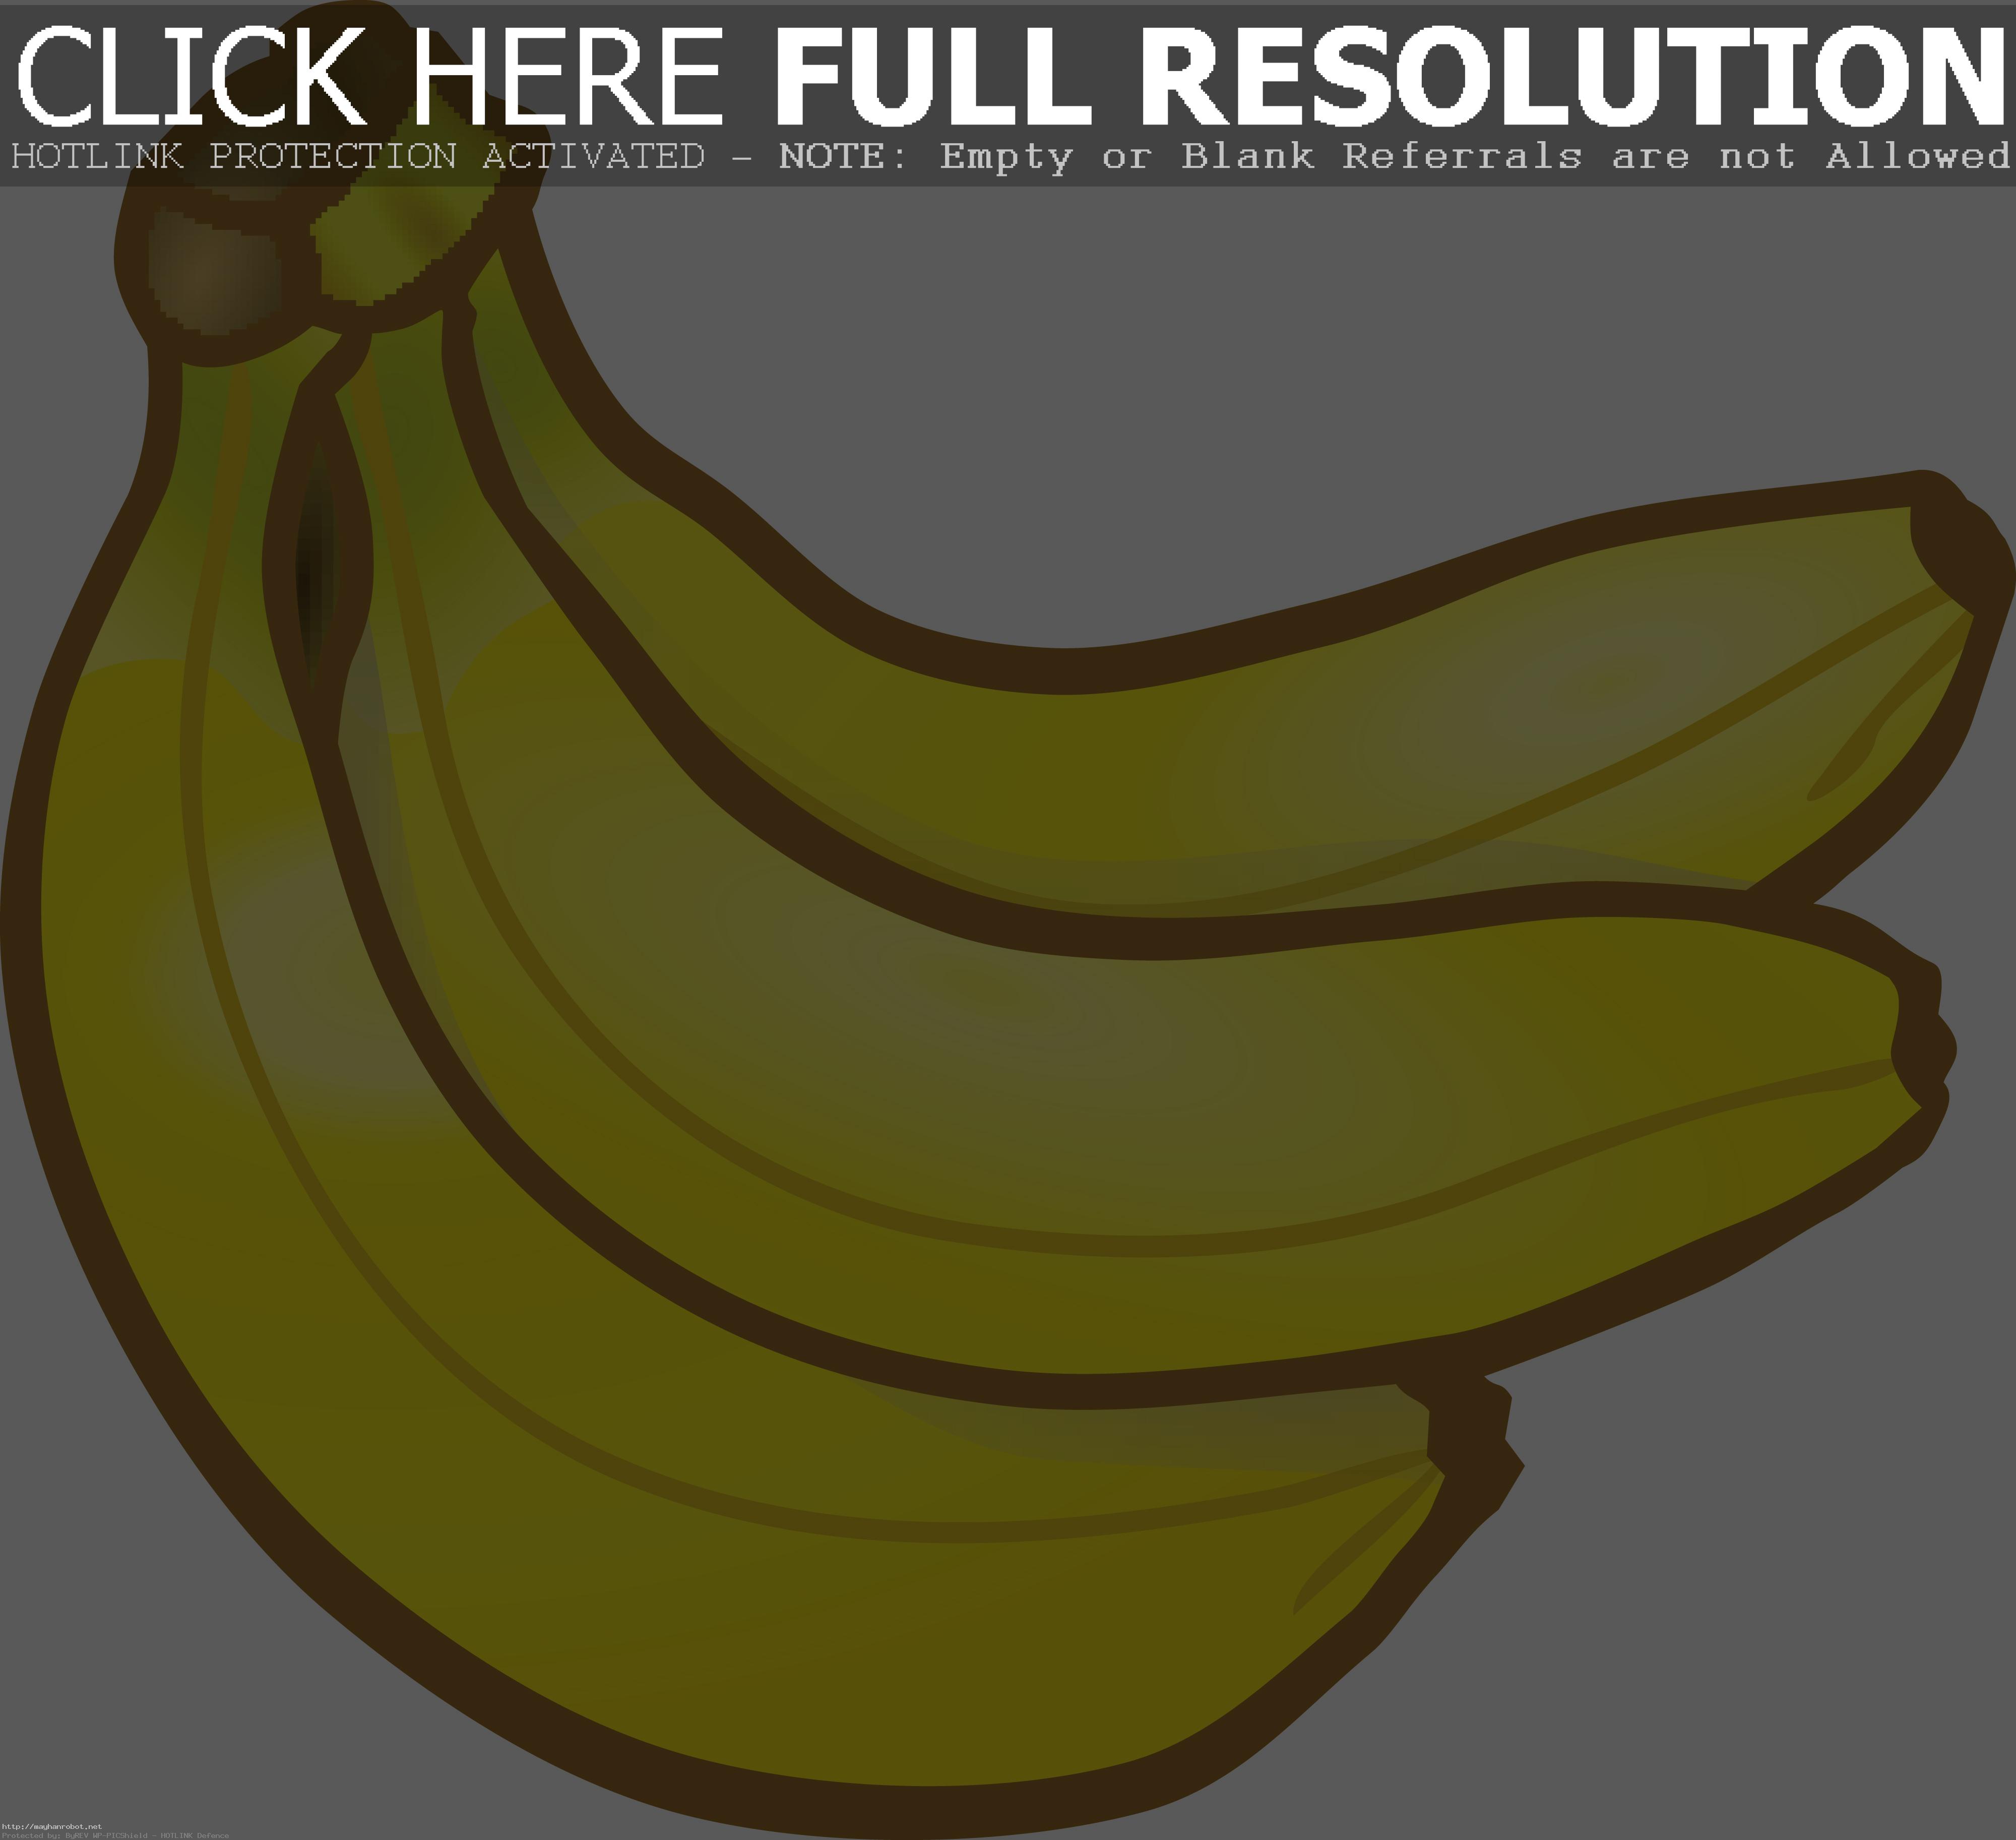 1636 Free Clipart Of A Banana - Banana Clipart